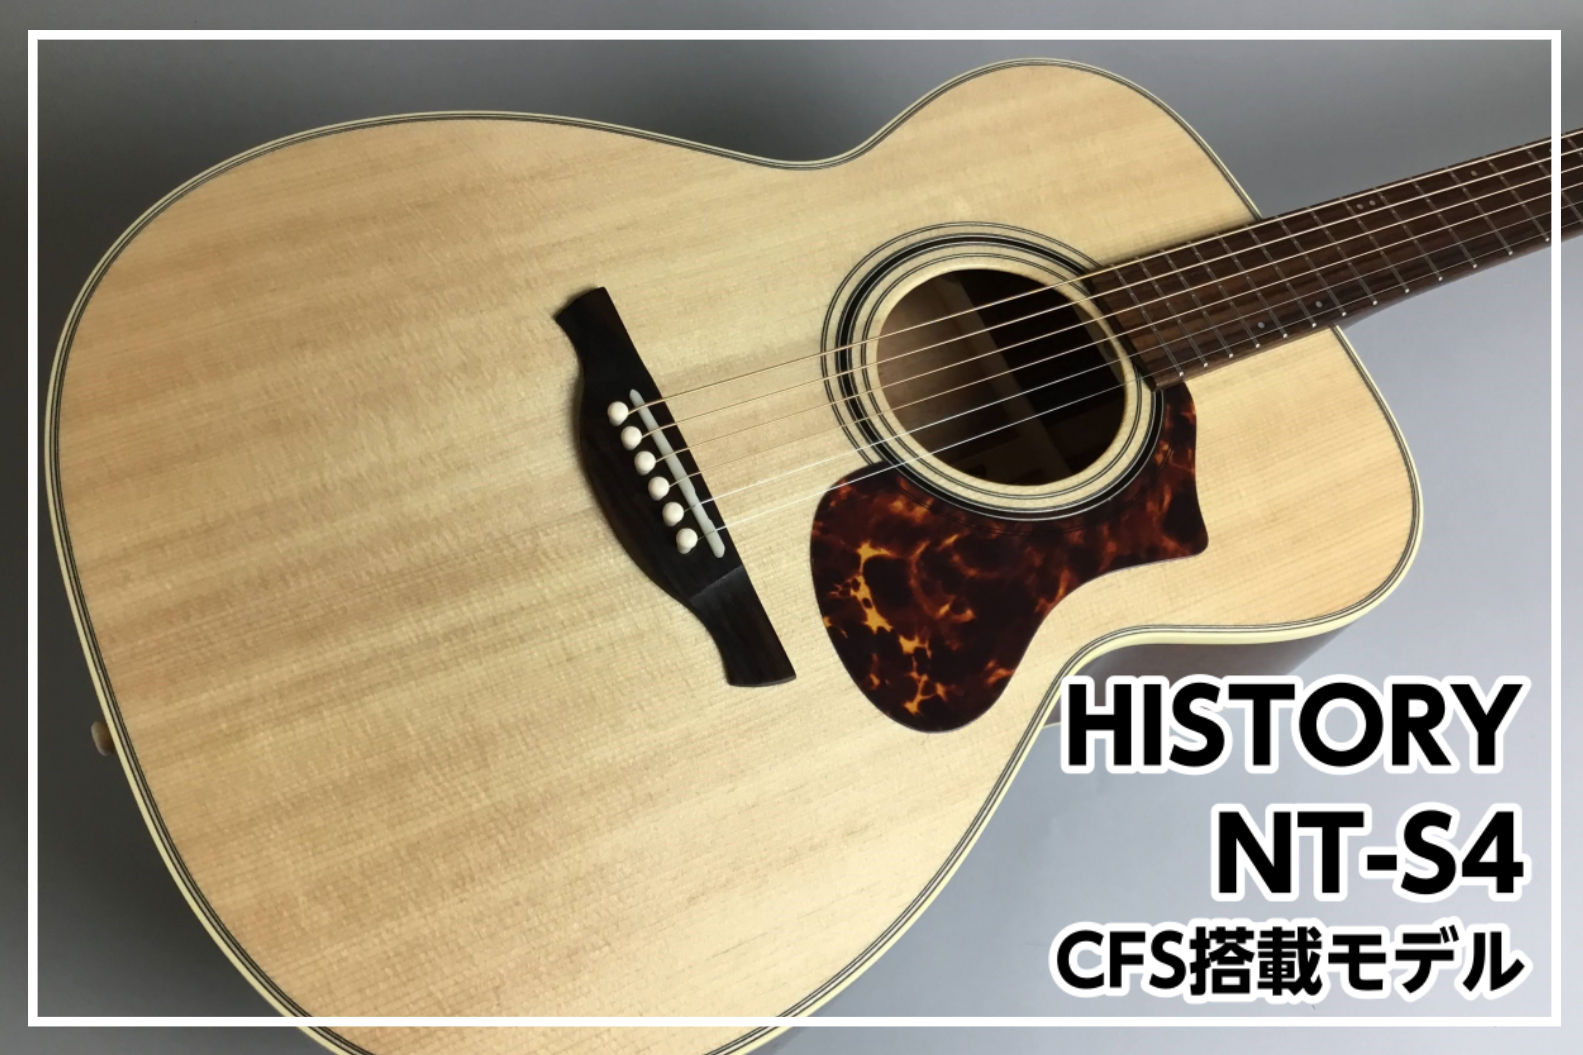 HISTORY NT-S4 CFS搭載モデル入荷!!